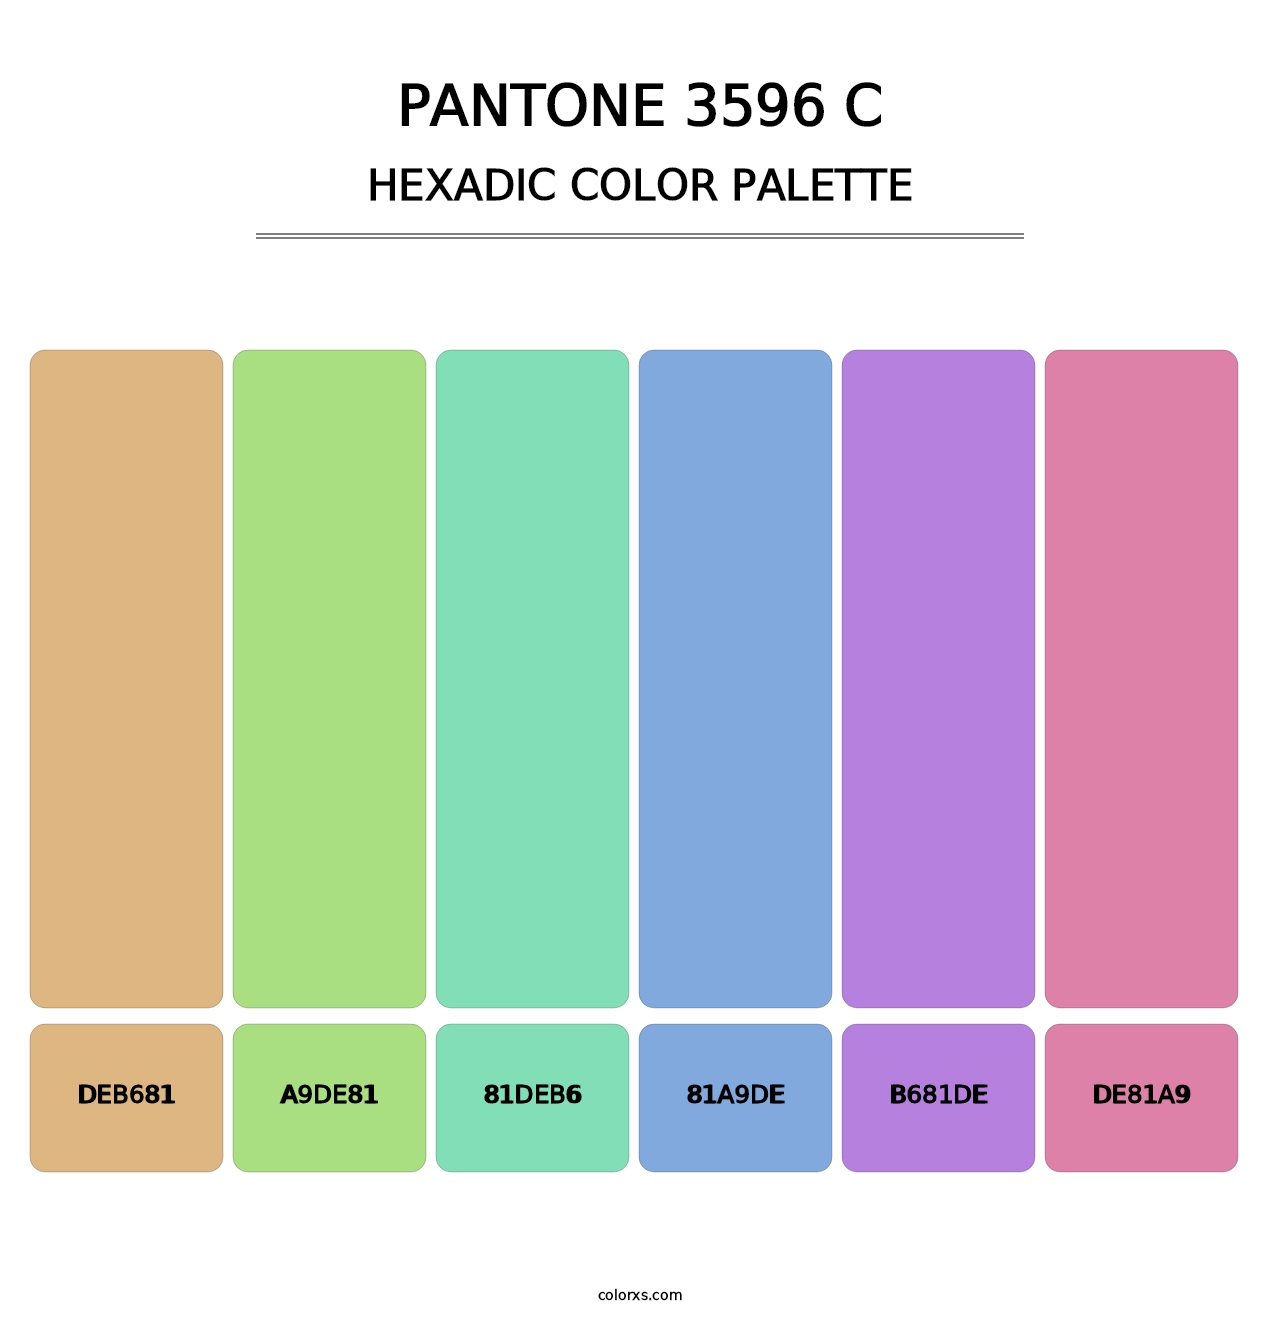 PANTONE 3596 C - Hexadic Color Palette